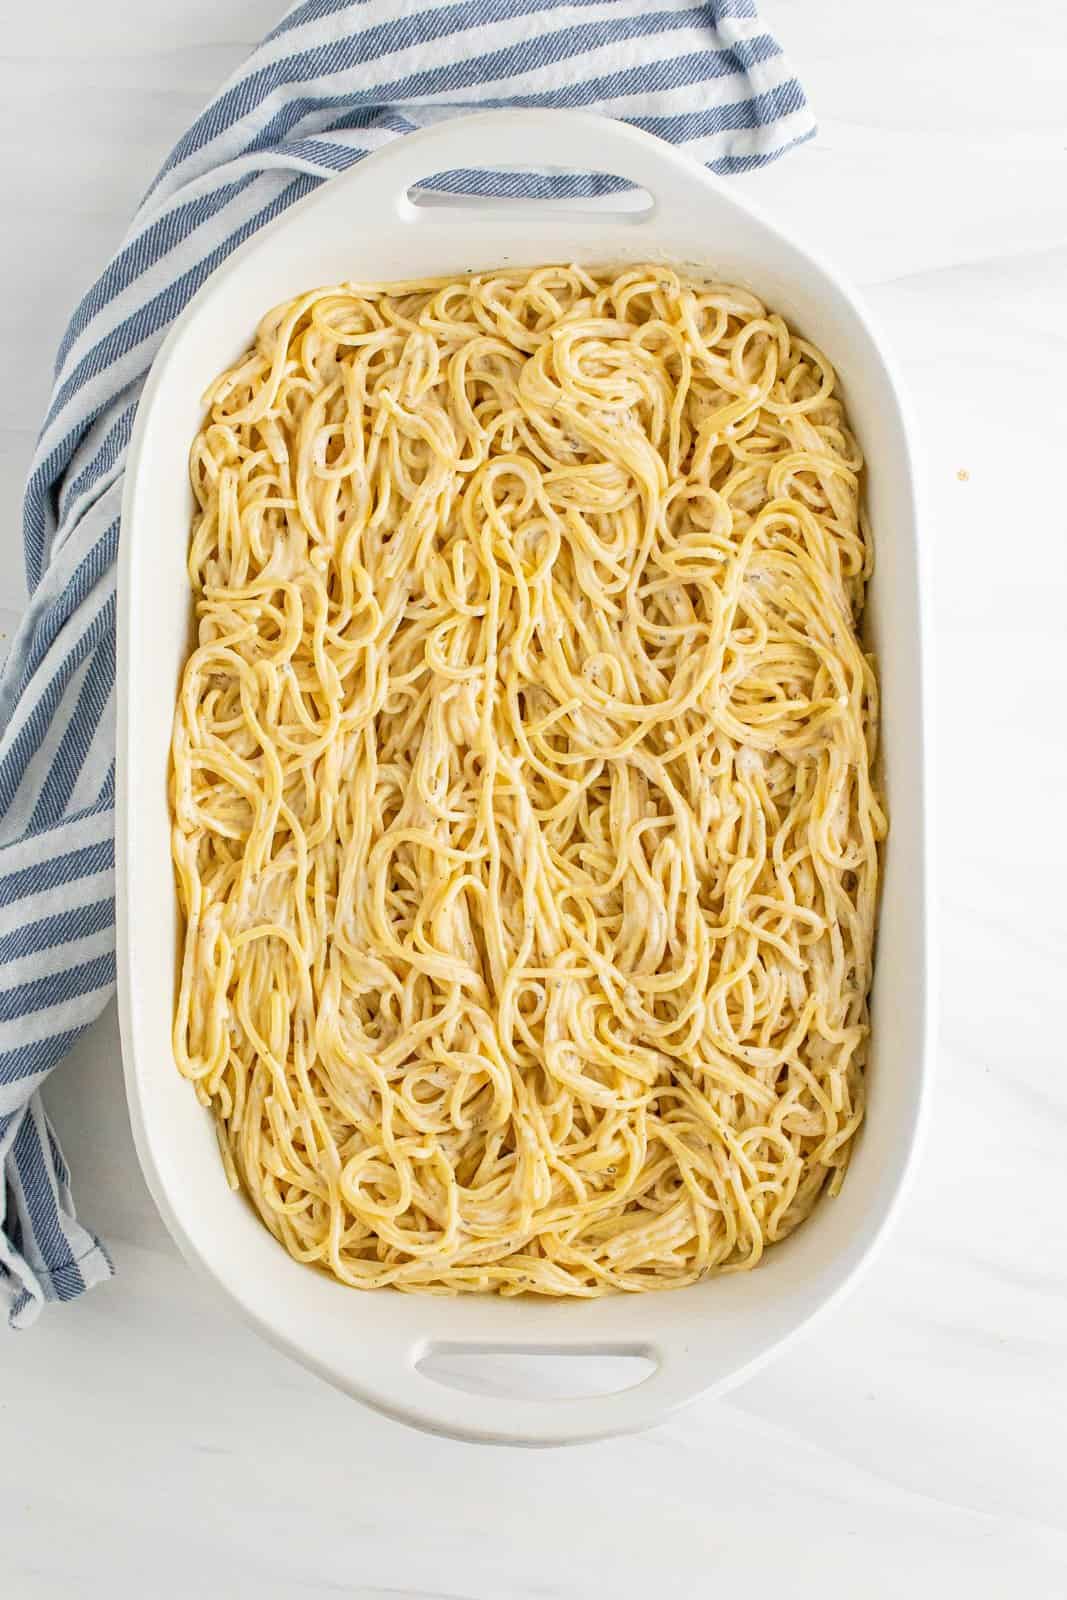 Alfredo covered spaghetti noodles in a prepared 9x13 baking dish.